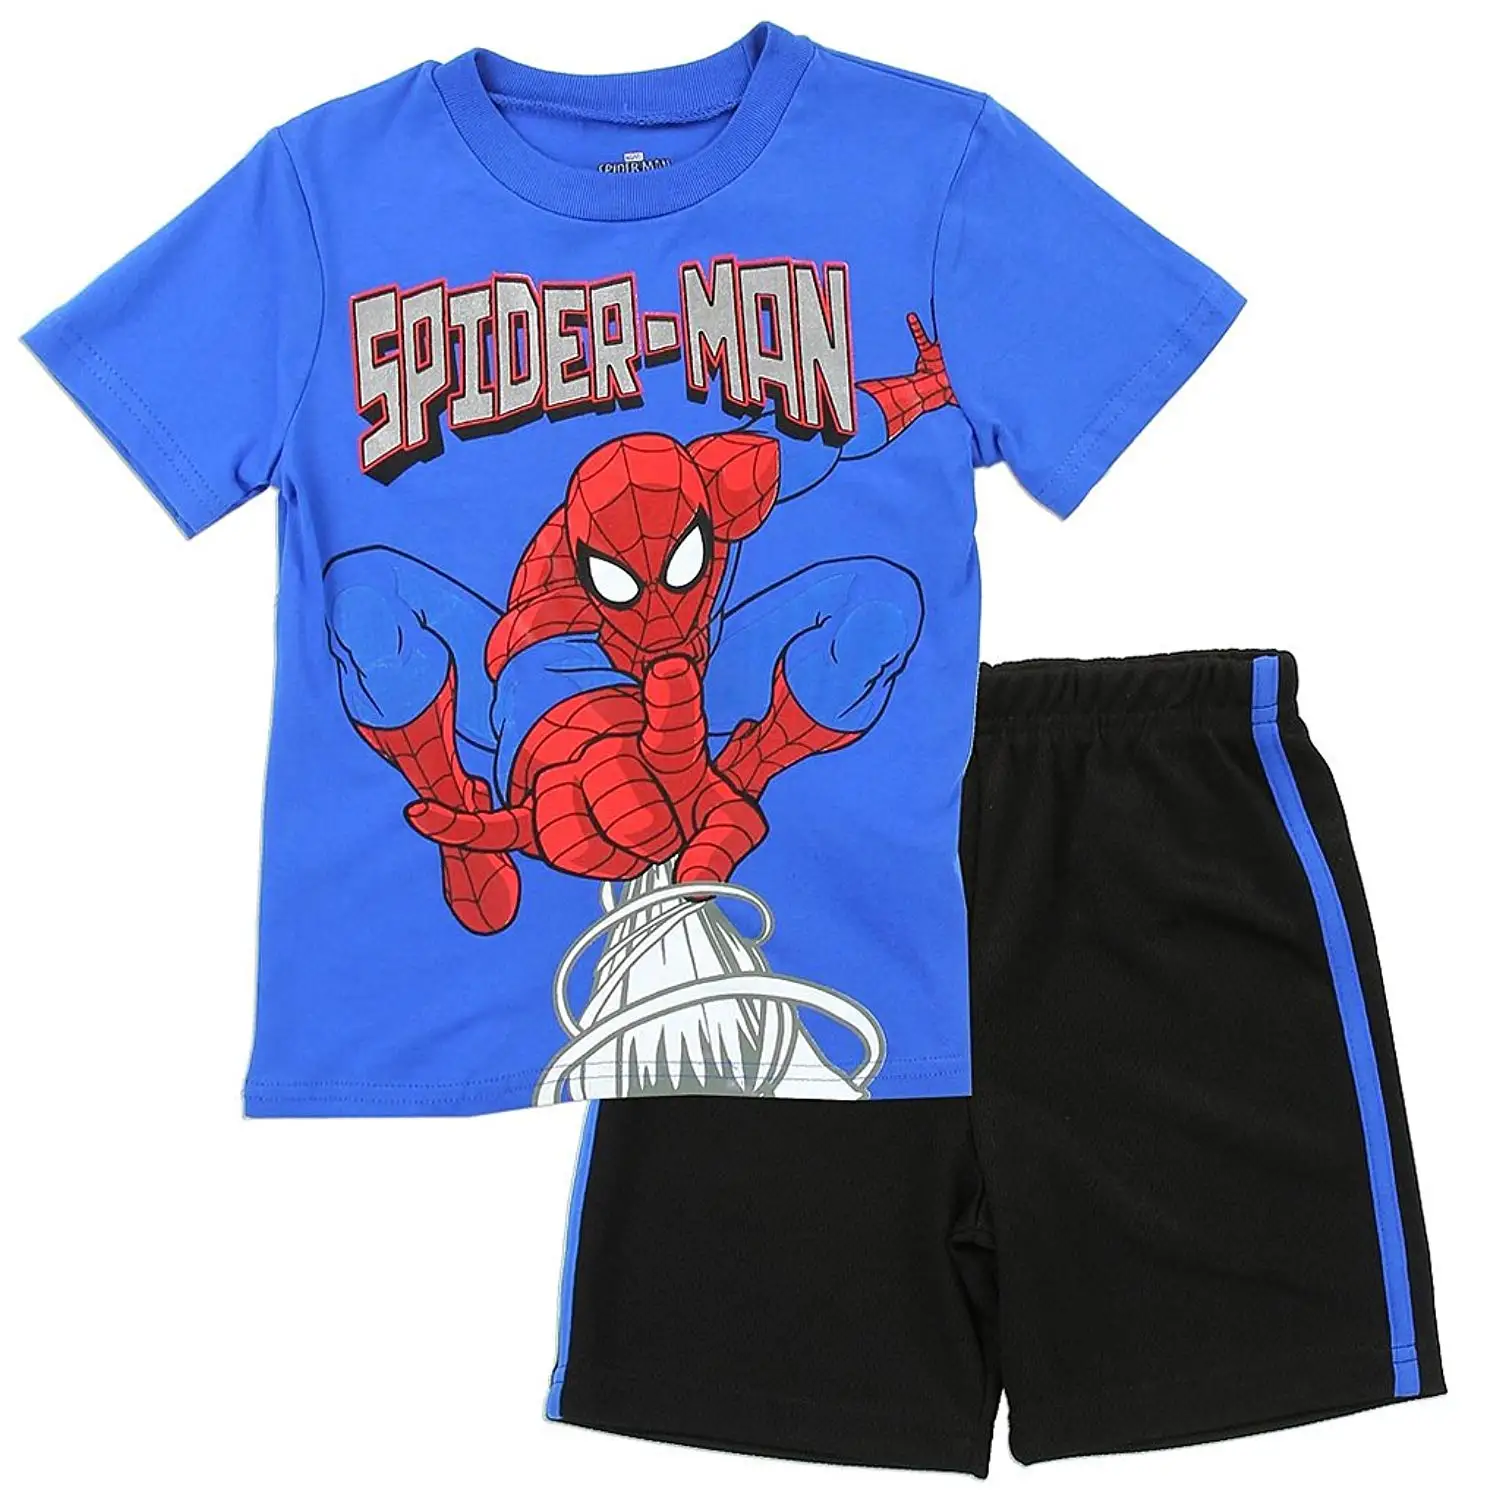 Cheap Spiderman Board Shorts, find Spiderman Board Shorts deals on line